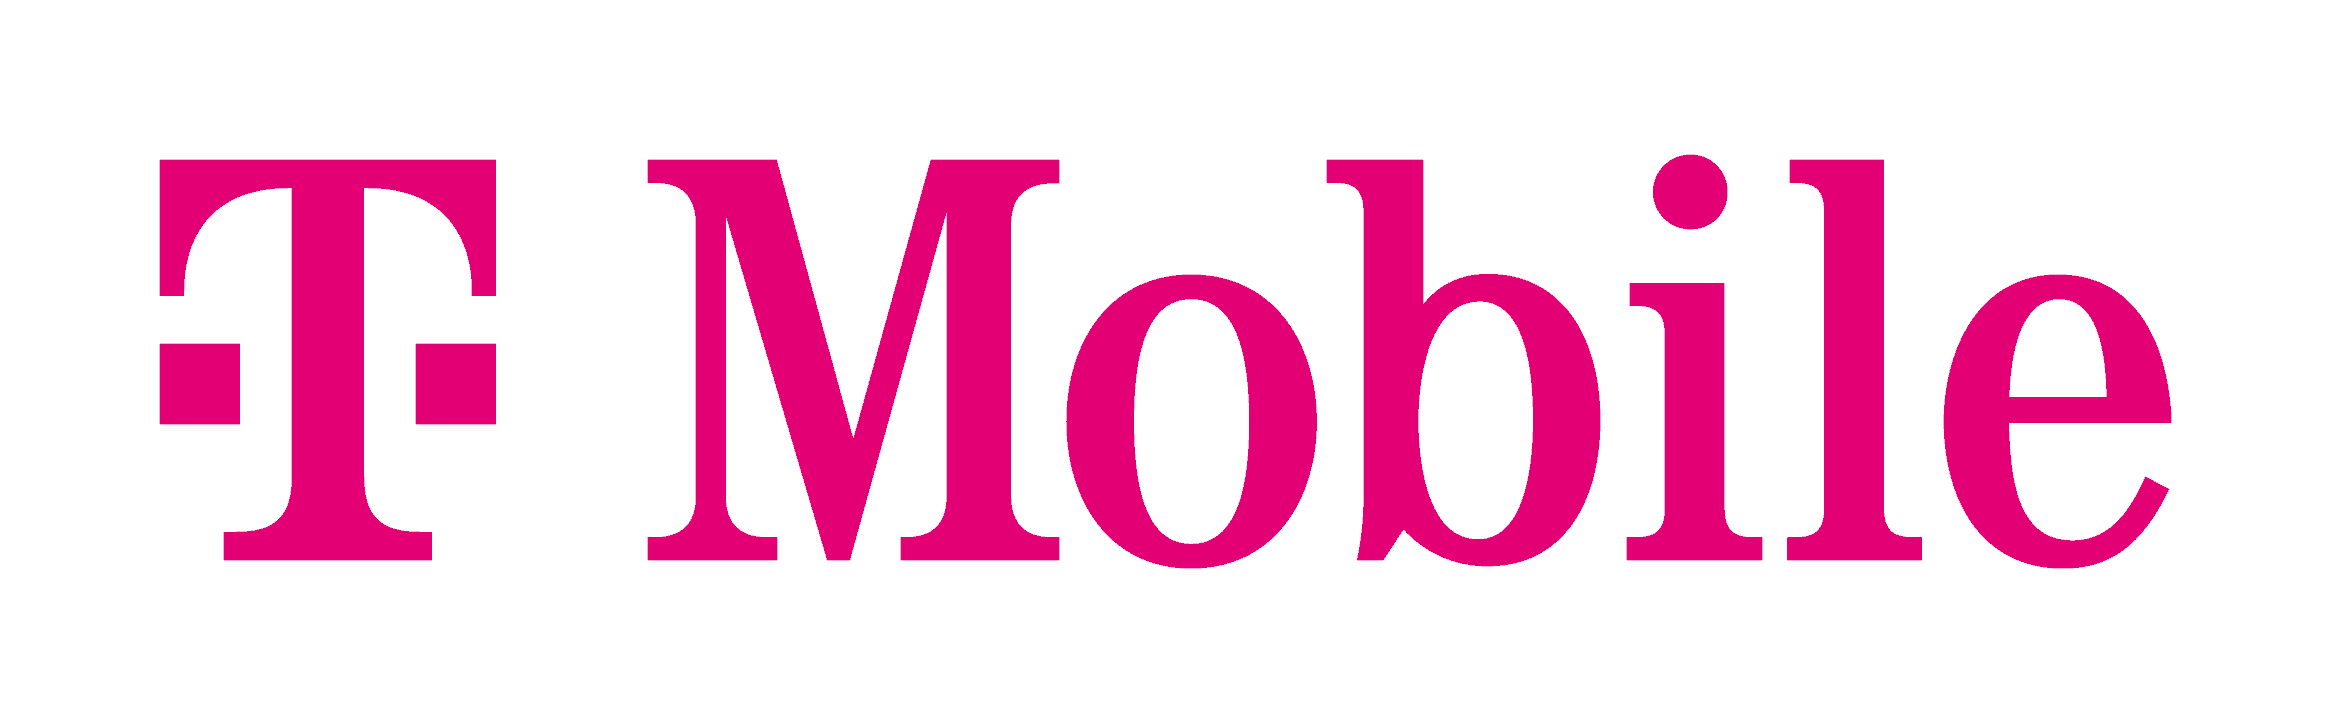 Tmobile Logo